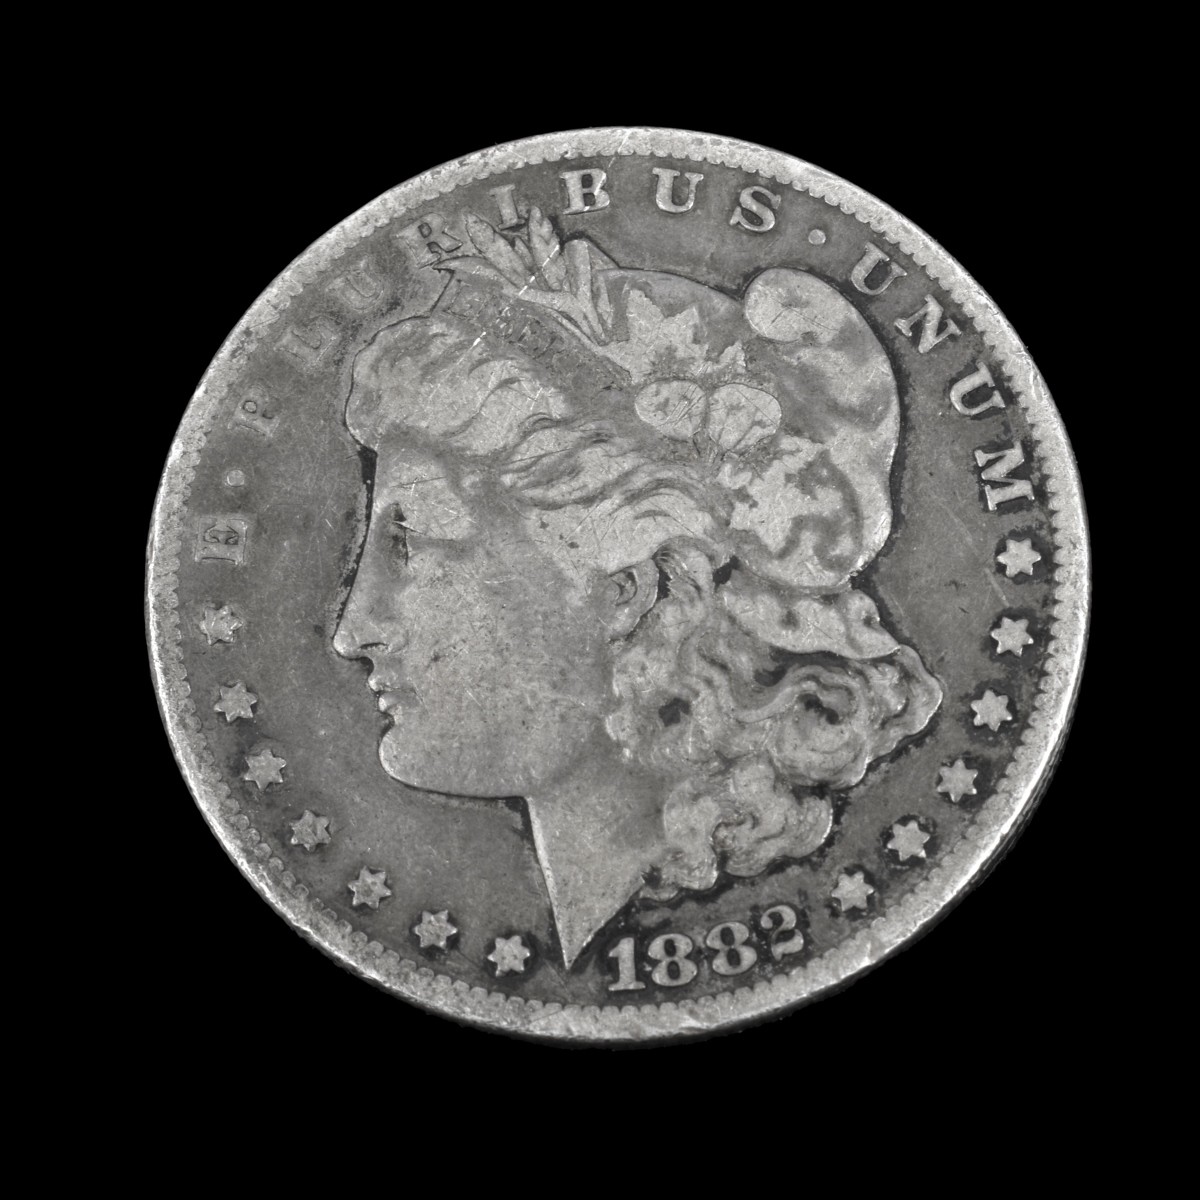 Nine U.S. Silver Morgan Dollars